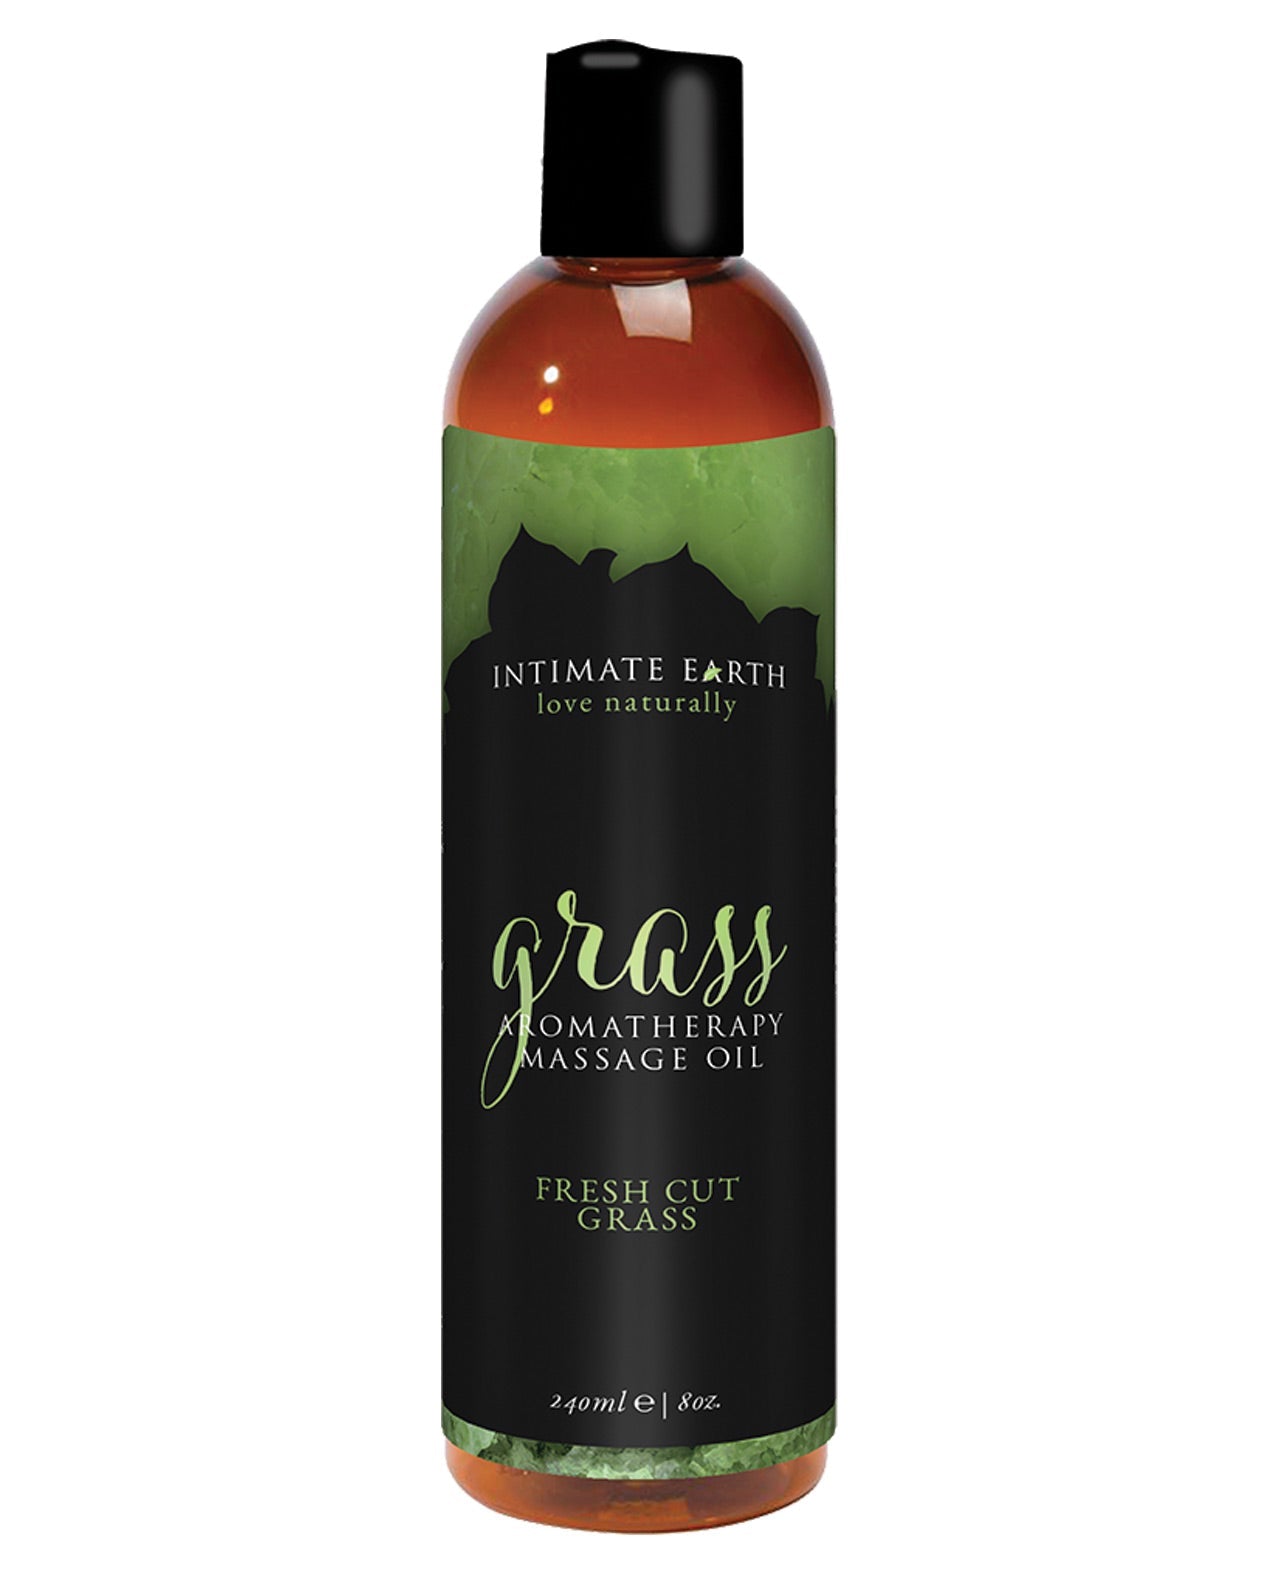 Intimate Earth Massage Oil - 240 ml Grass